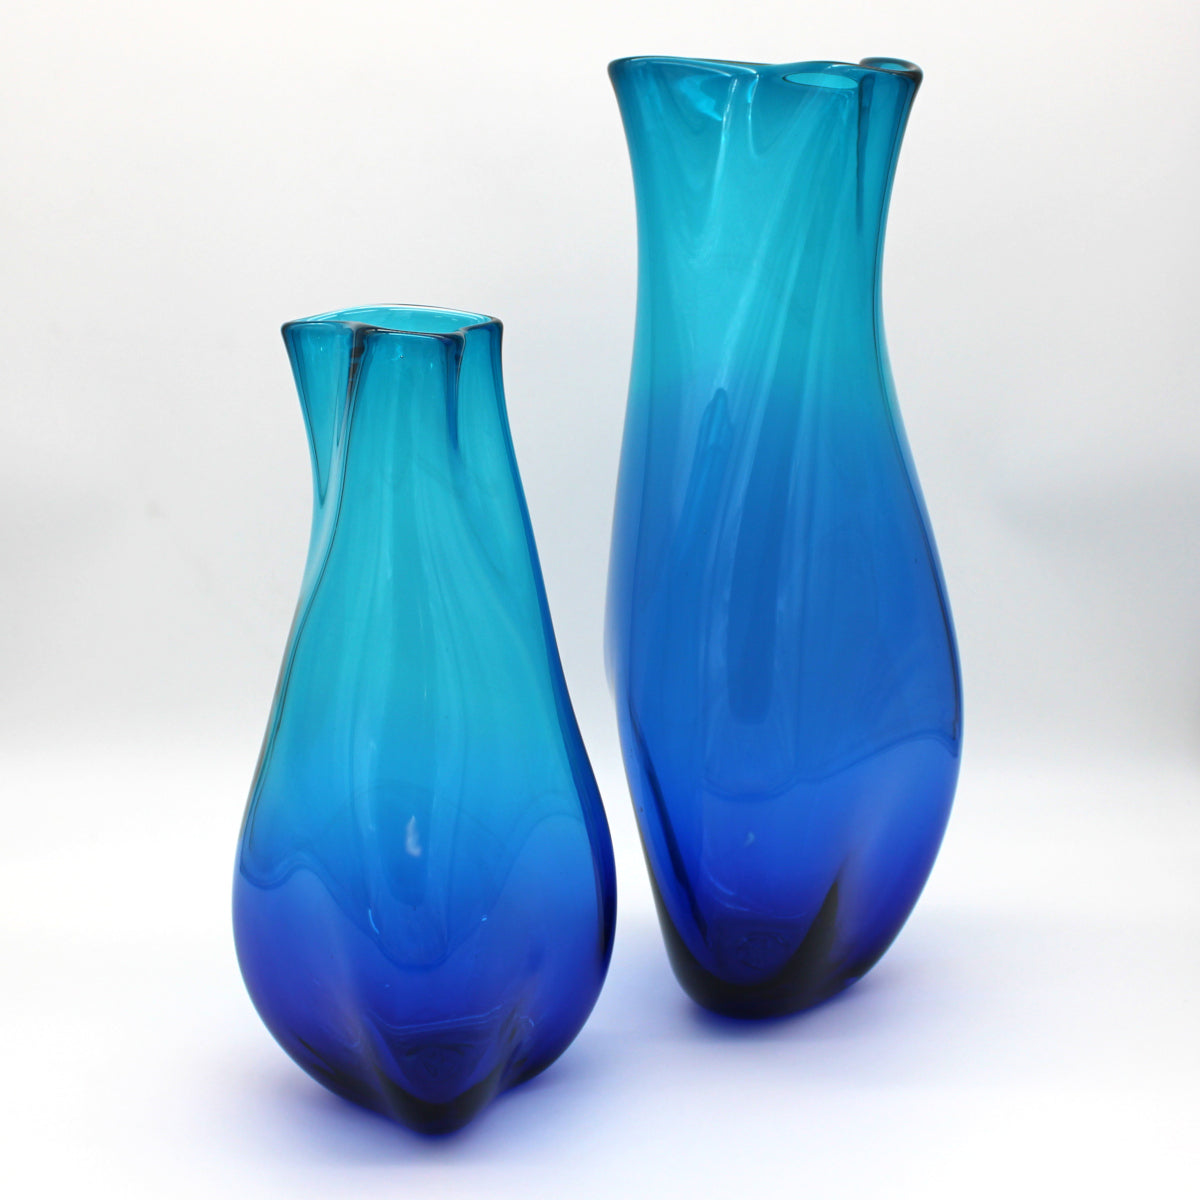 Rumple Vases